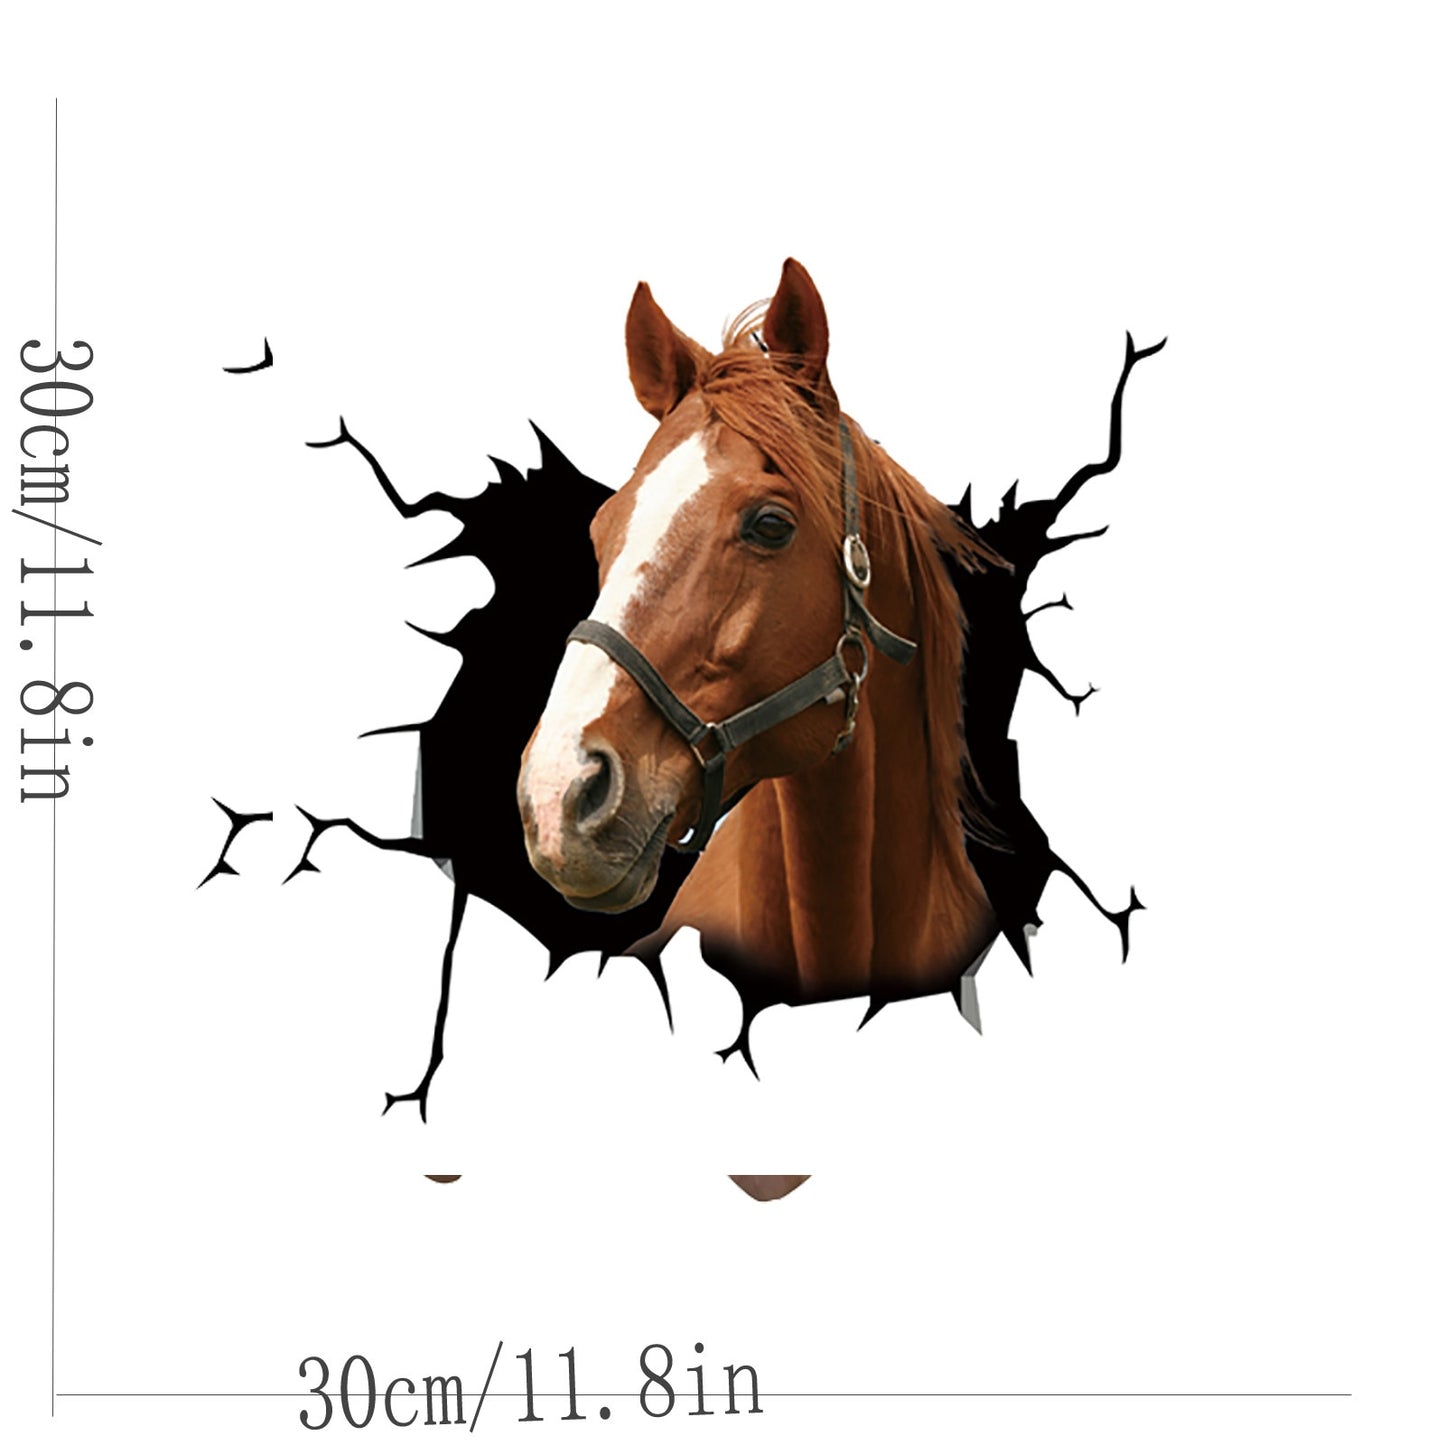 Etiqueta engomada estática del vidrio de la pasta de la ventana del coche del caballo del toro